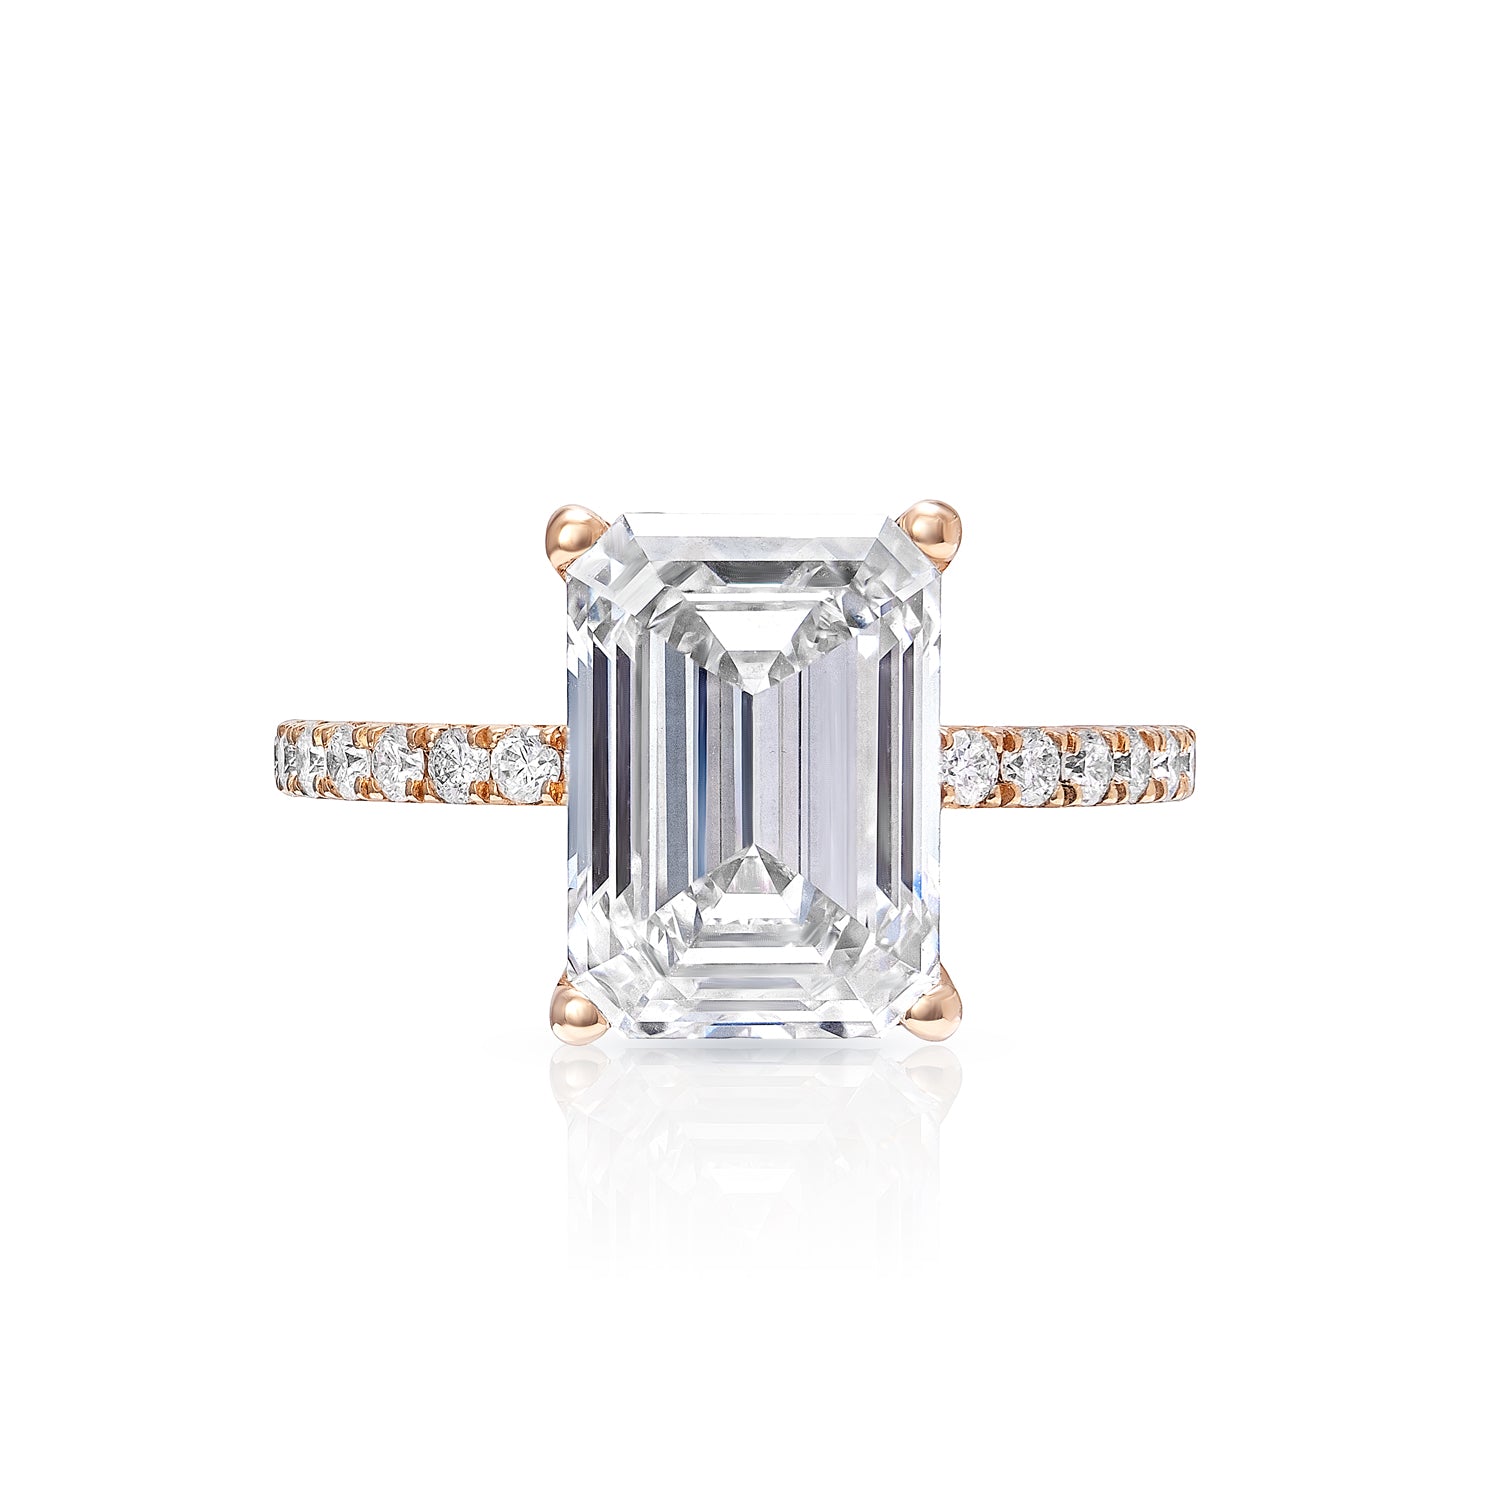 Leland 5 Carat H VVS2 Emerald Cut Lab Grown Diamond Engagement Ring in 18kt Rose Gold Front View